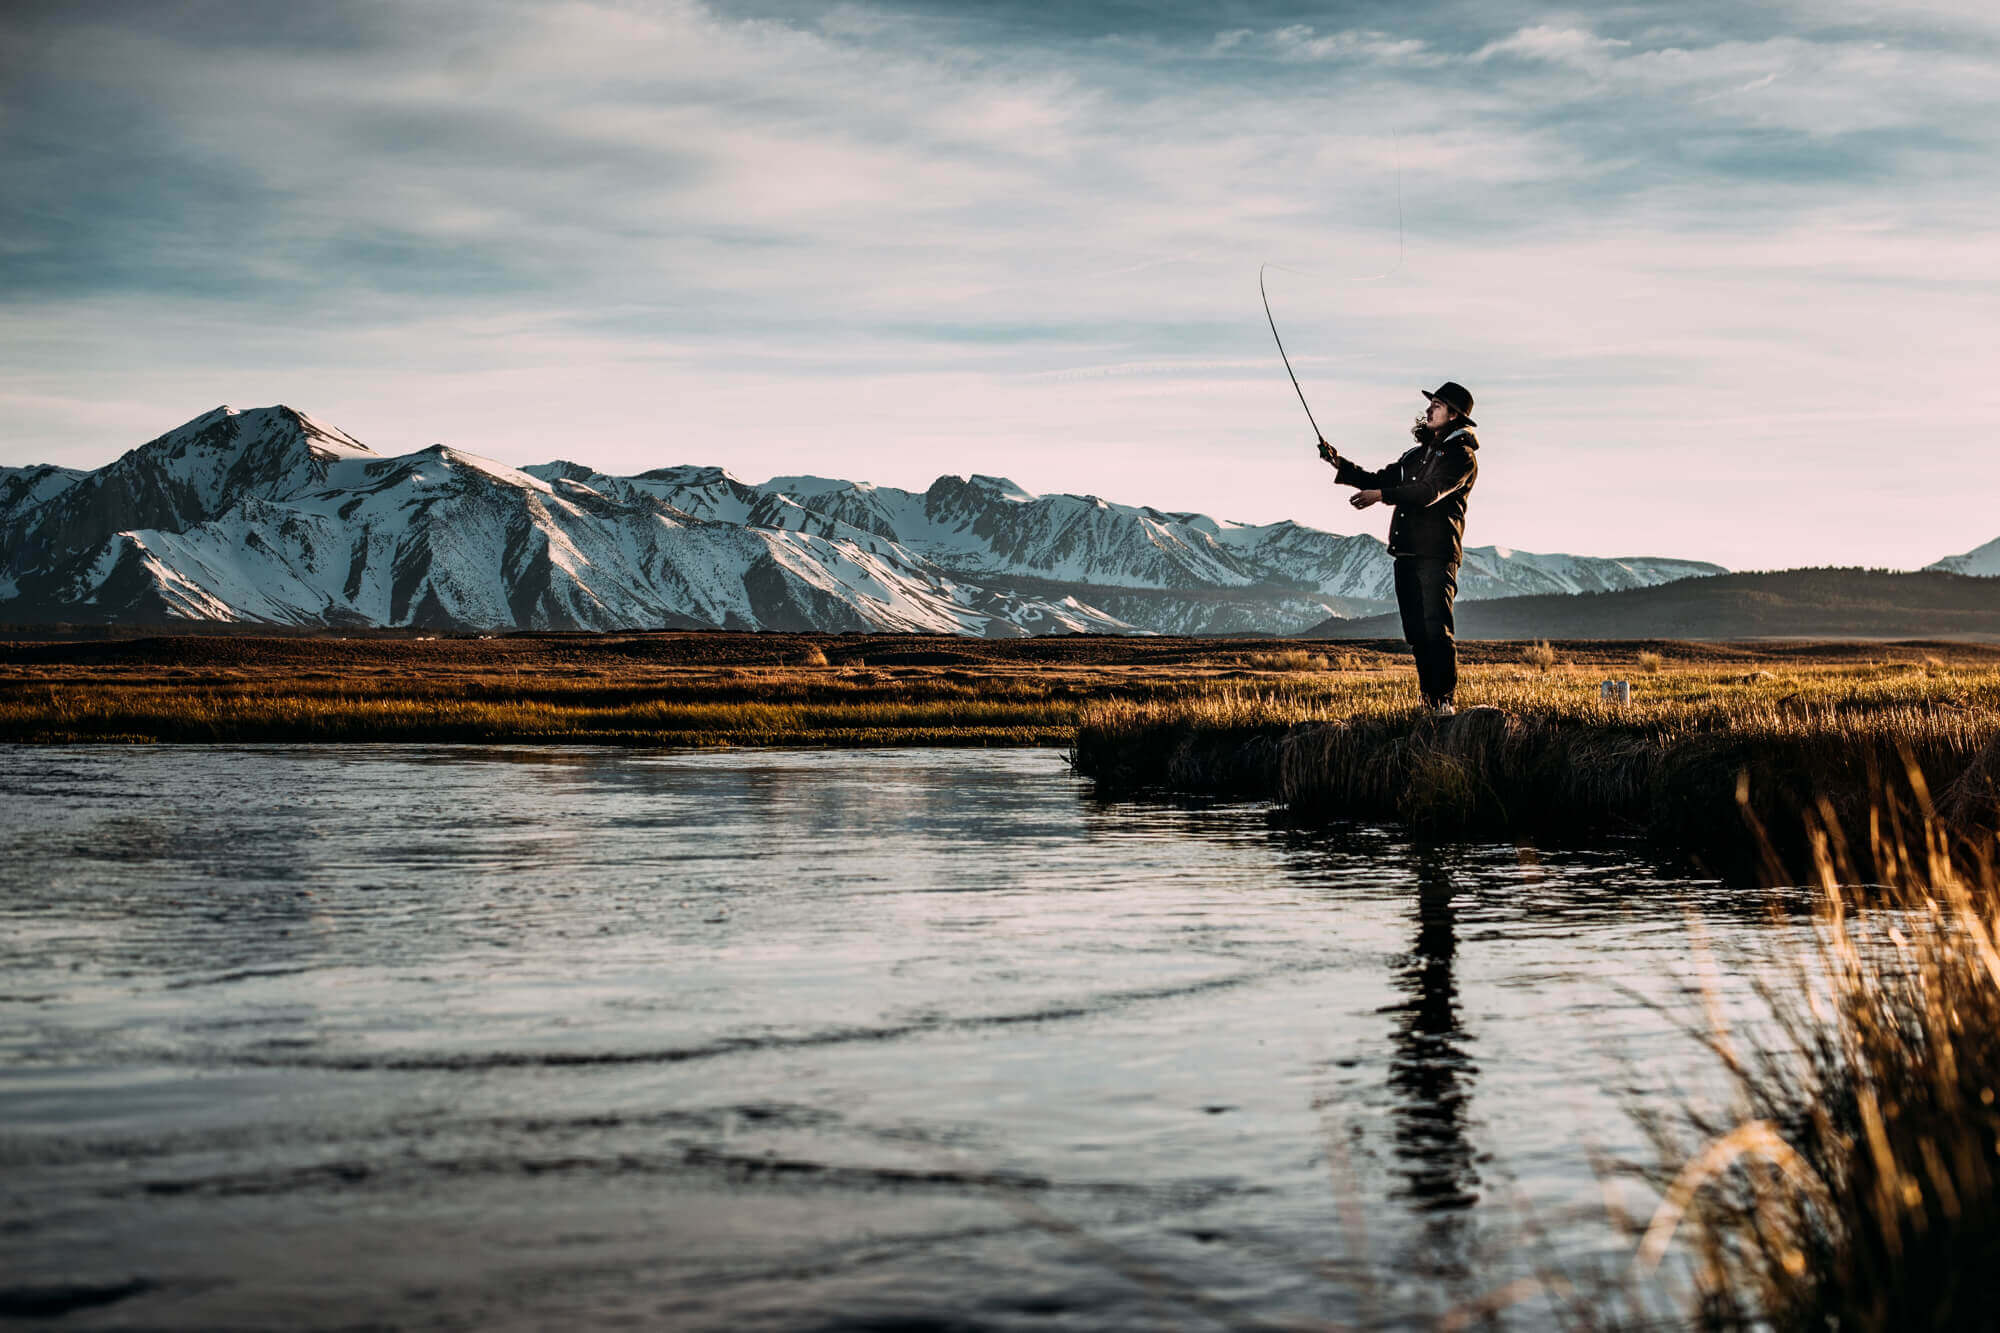 A man fishing in a lake